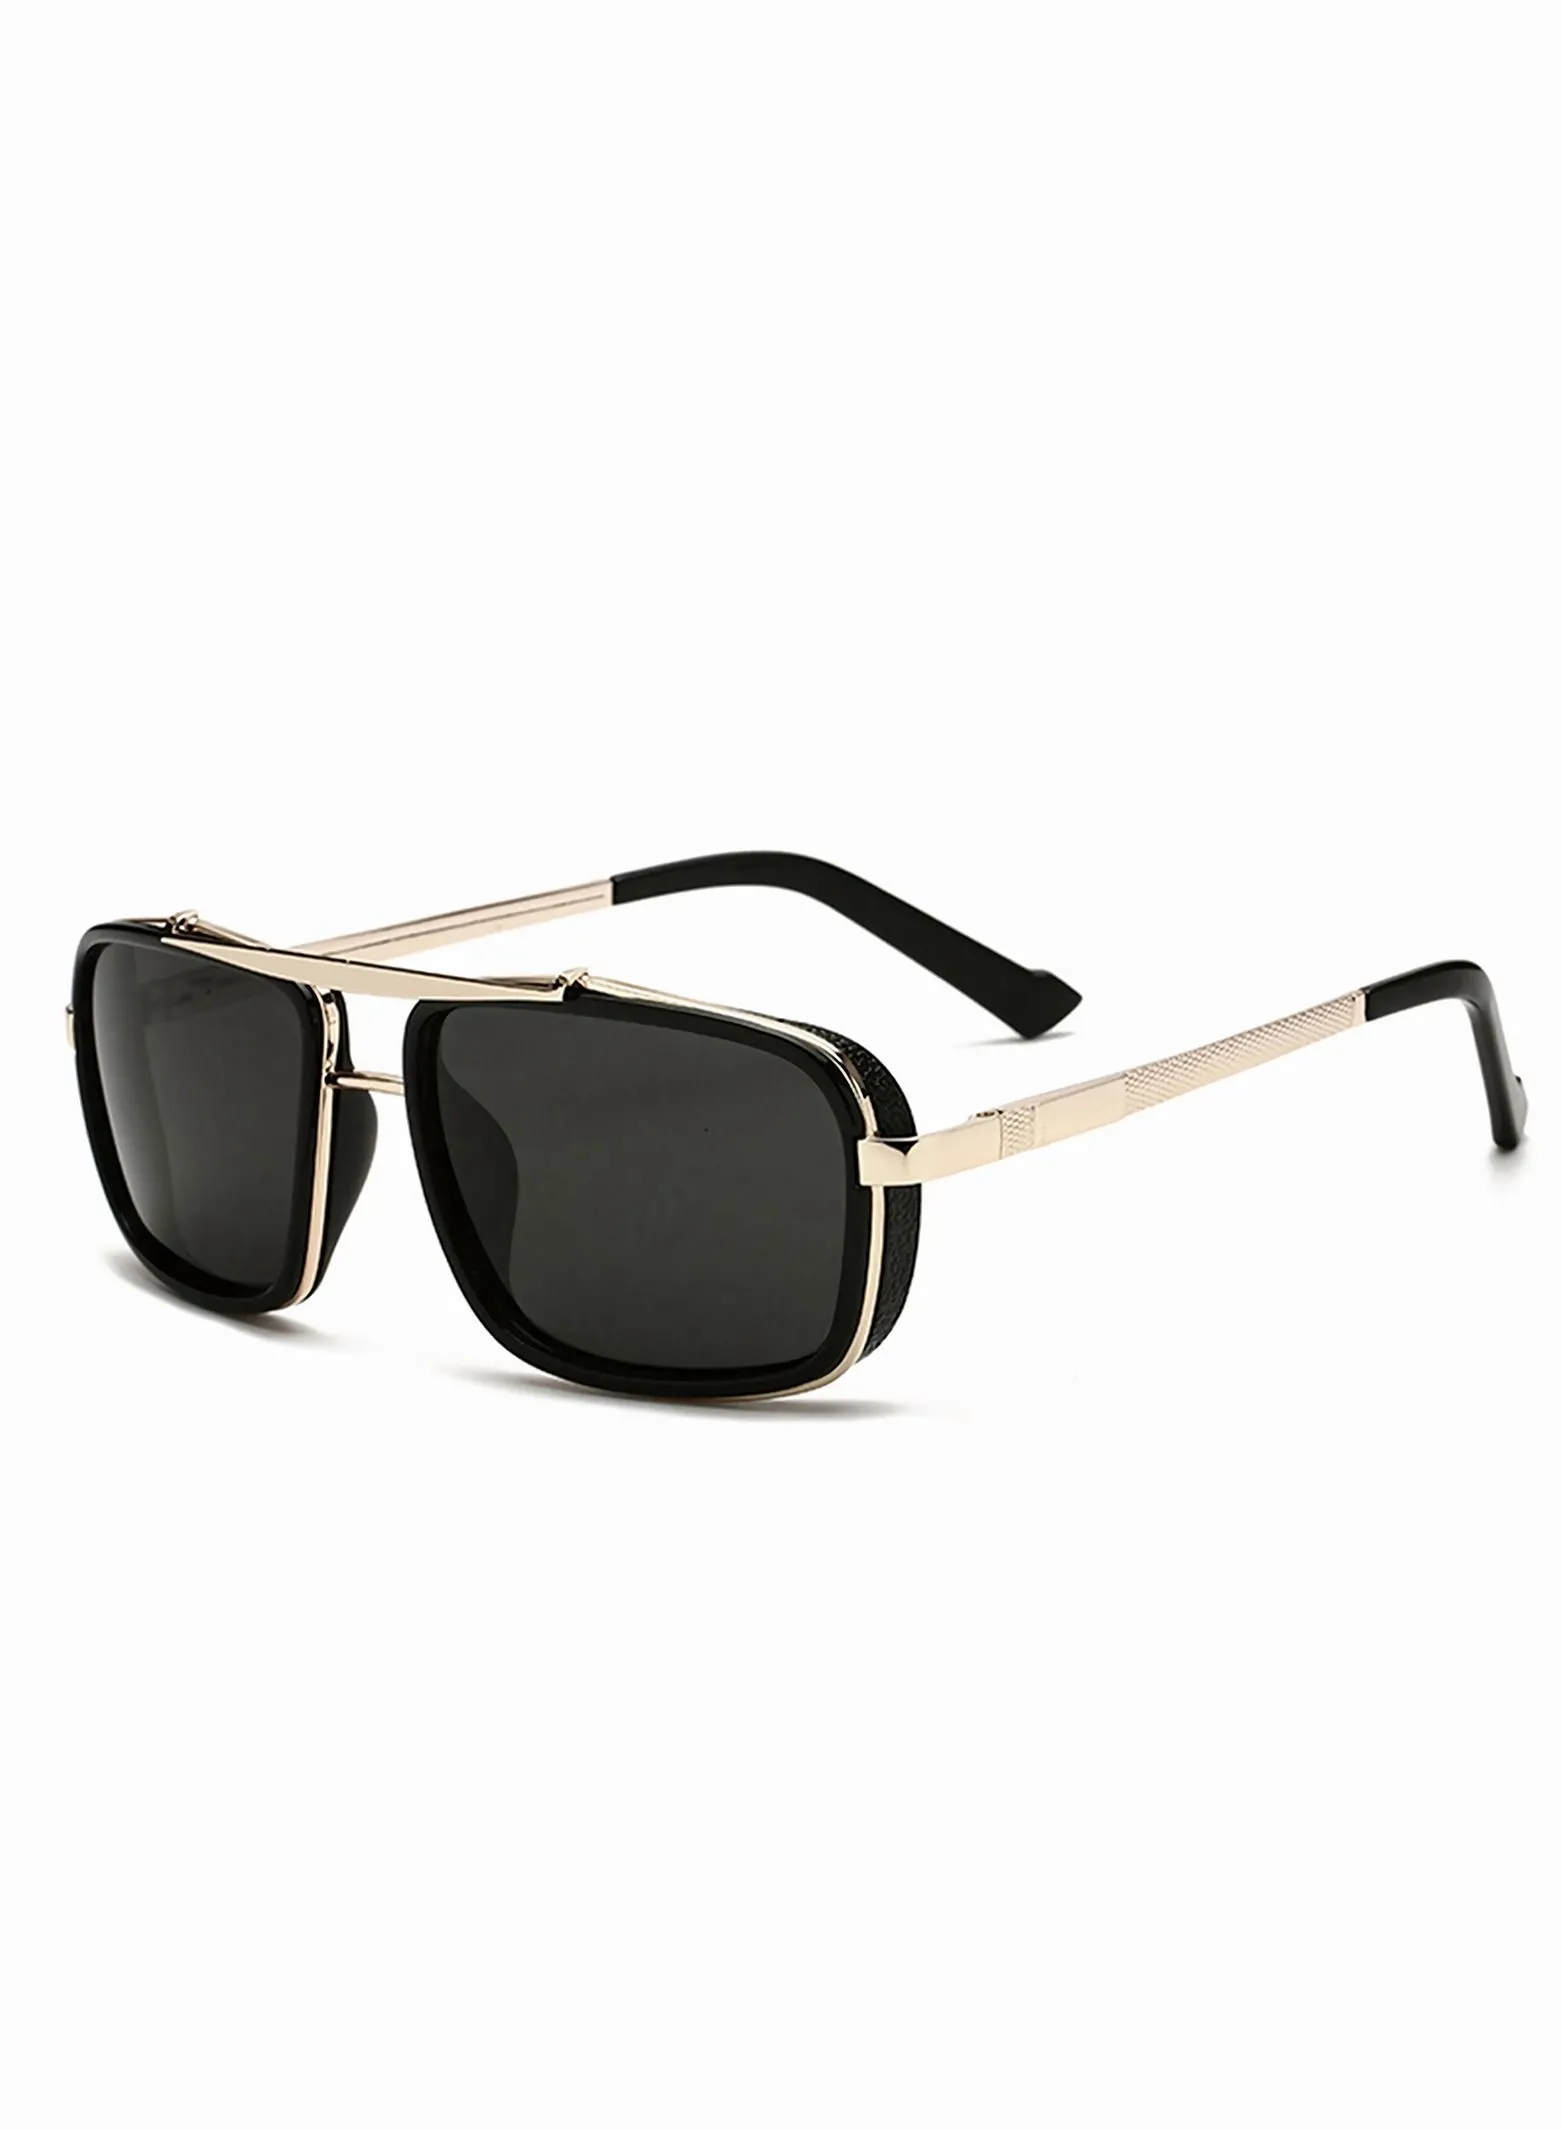 roaiss Men's Rectangular Sunglasses Polarized Lenses UV400 Protection Aluminum Magnesium Alloy Arms with Glasses Case for Shopping Driving Riding Trekking (Golden Black)